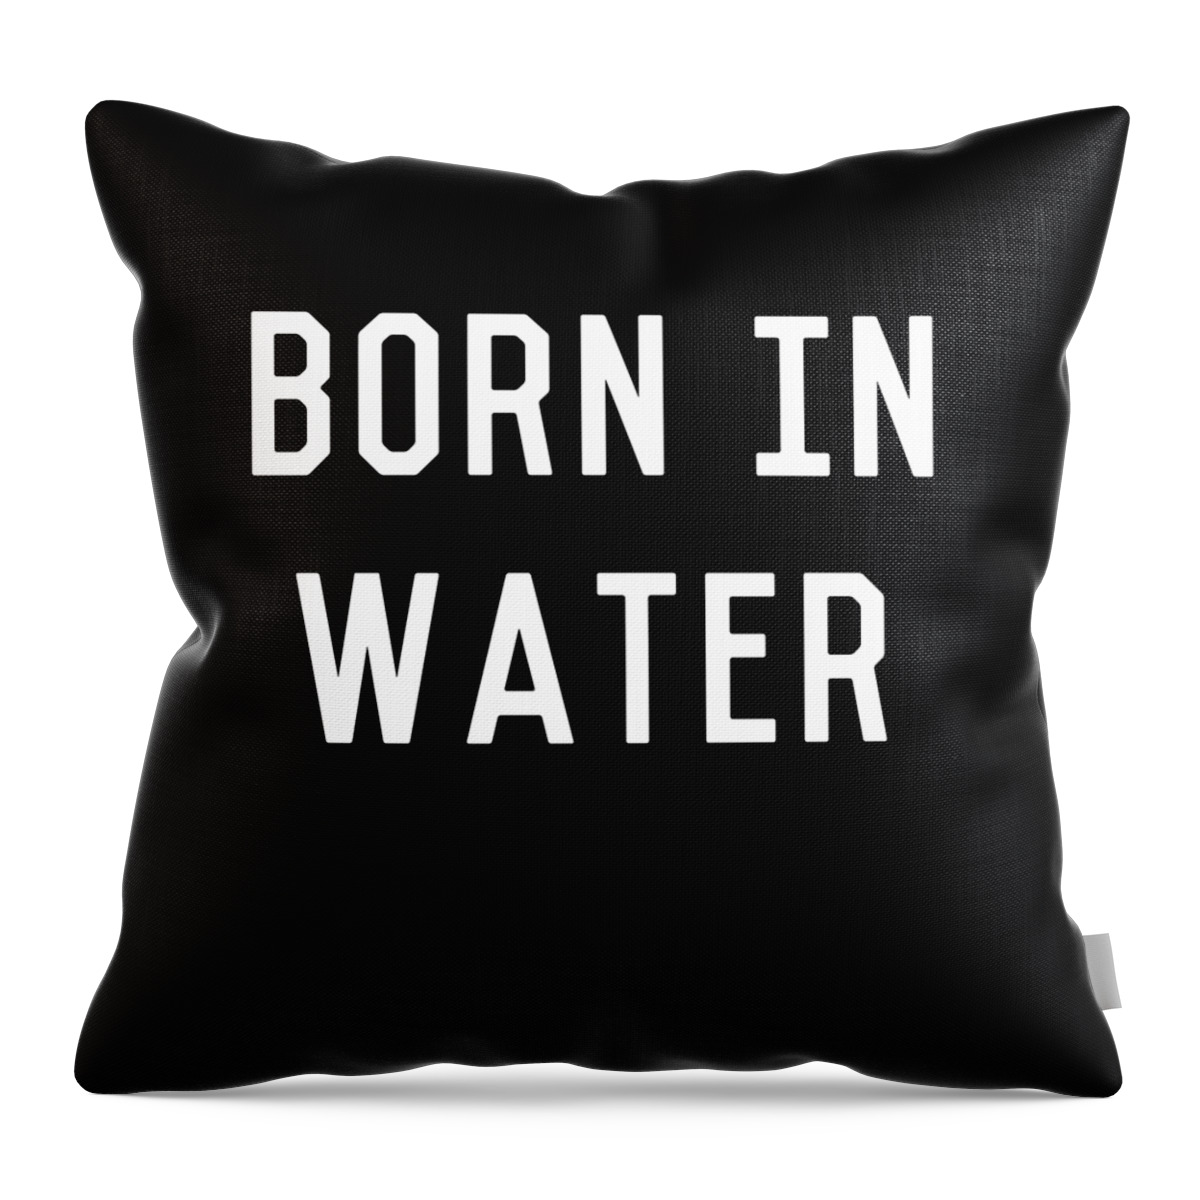 Funny Throw Pillow featuring the digital art Born In Water Mermaid Beach Bum by Flippin Sweet Gear